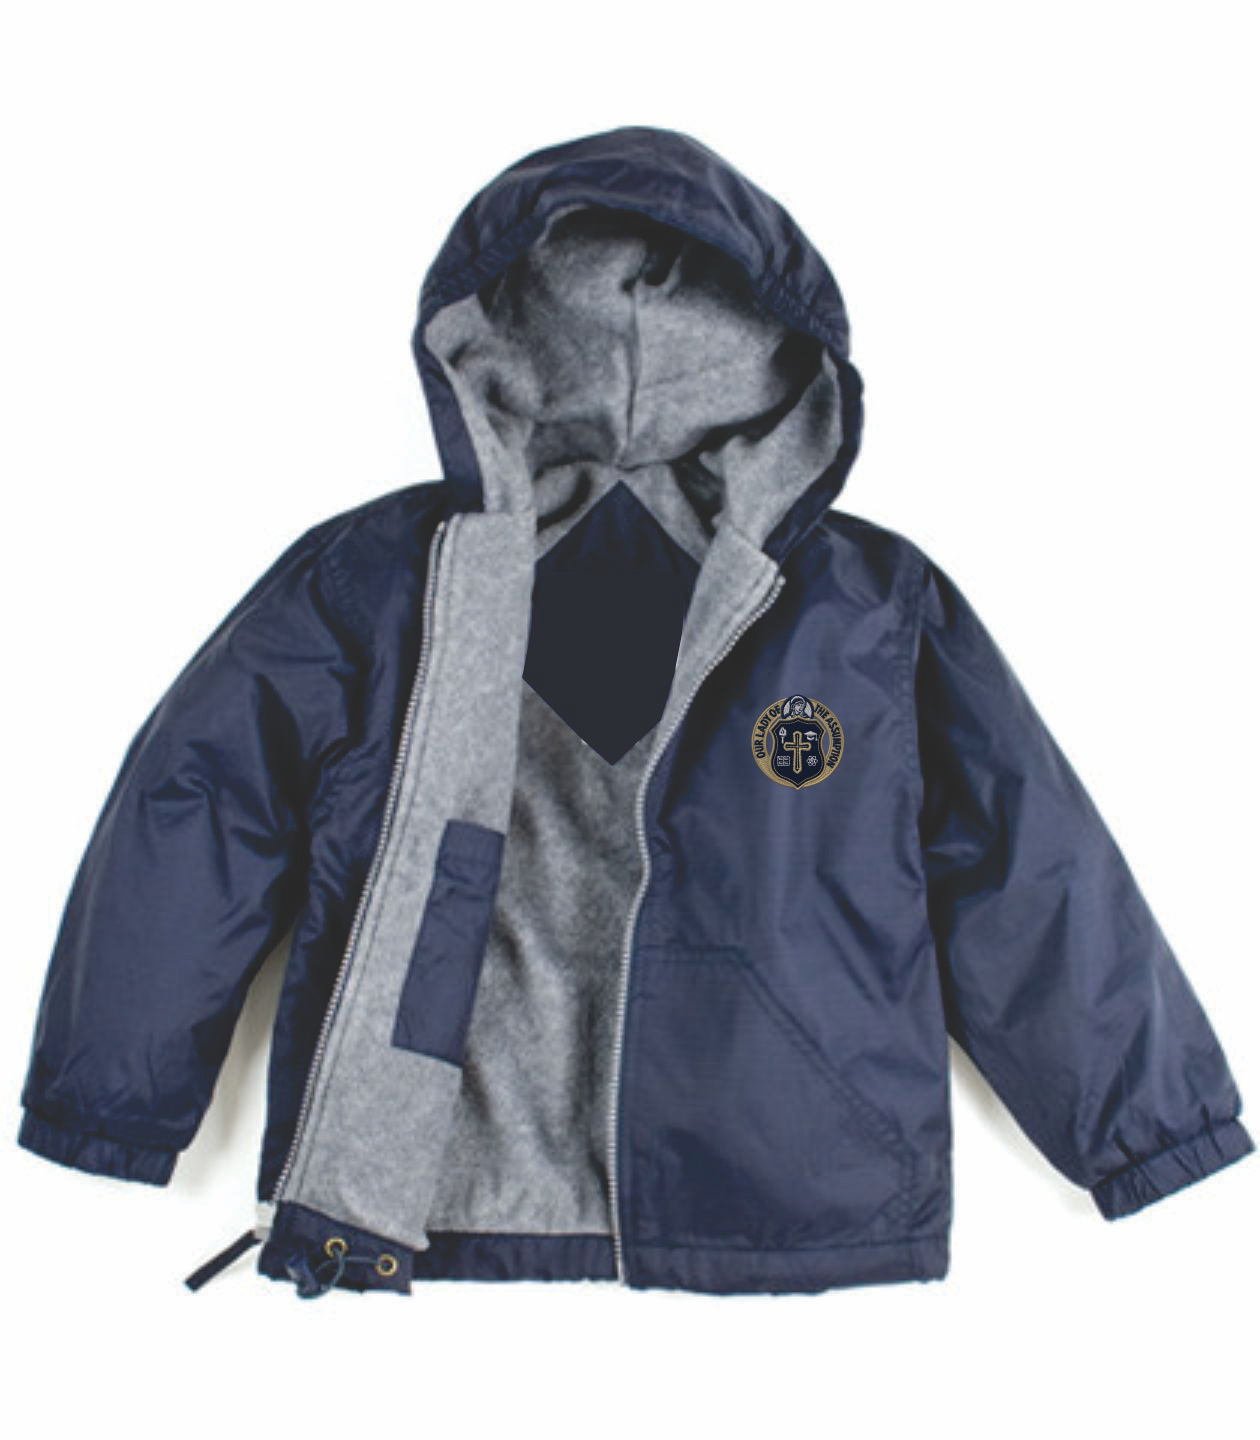 8830 OLA Windbreaker Jacket - The Uniform Store